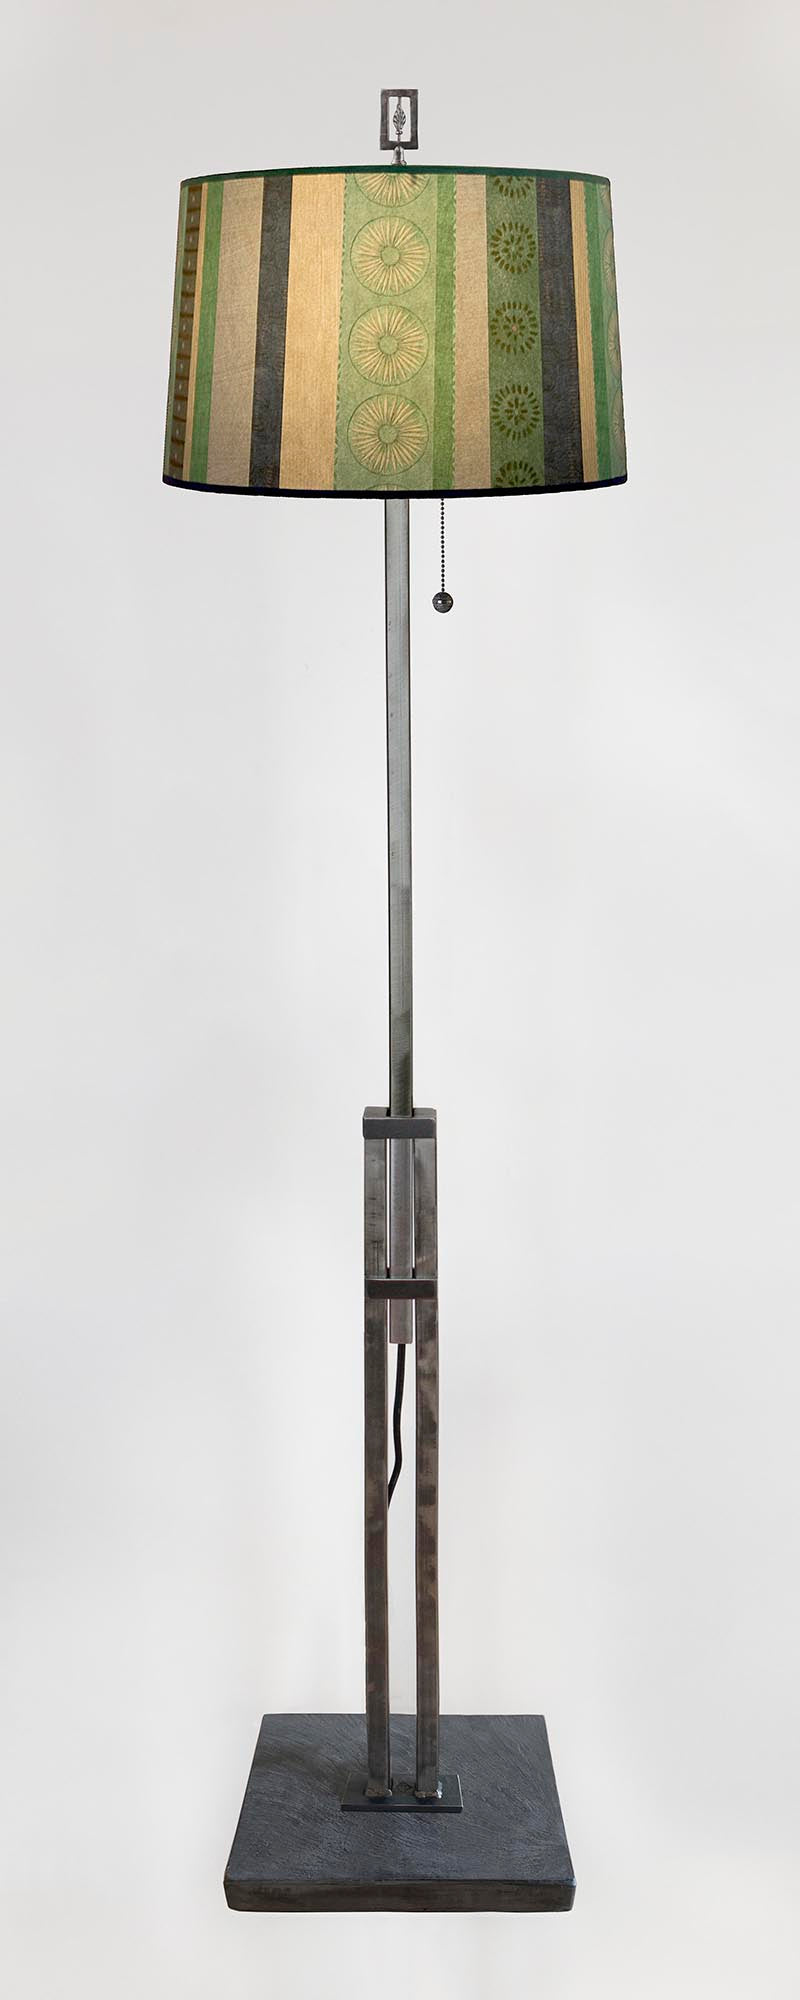 Janna Ugone & Co Floor Lamps Adjustable-Height Steel Floor Lamp with Large Drum Shade in Serape Waters